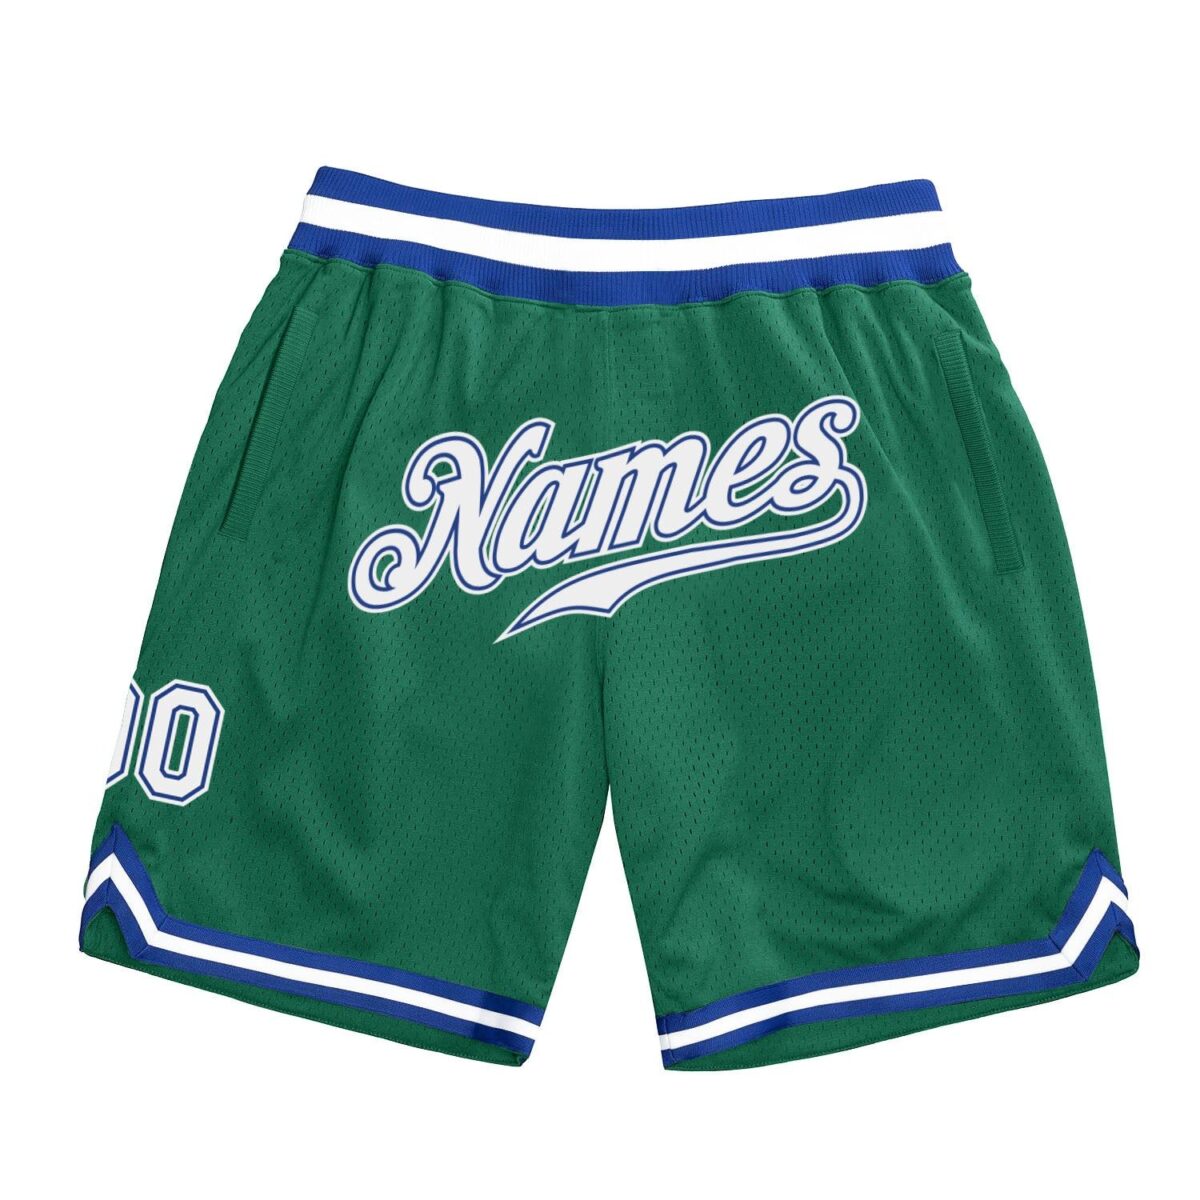 Green & White Blue Color Base Basketball Shorts 1